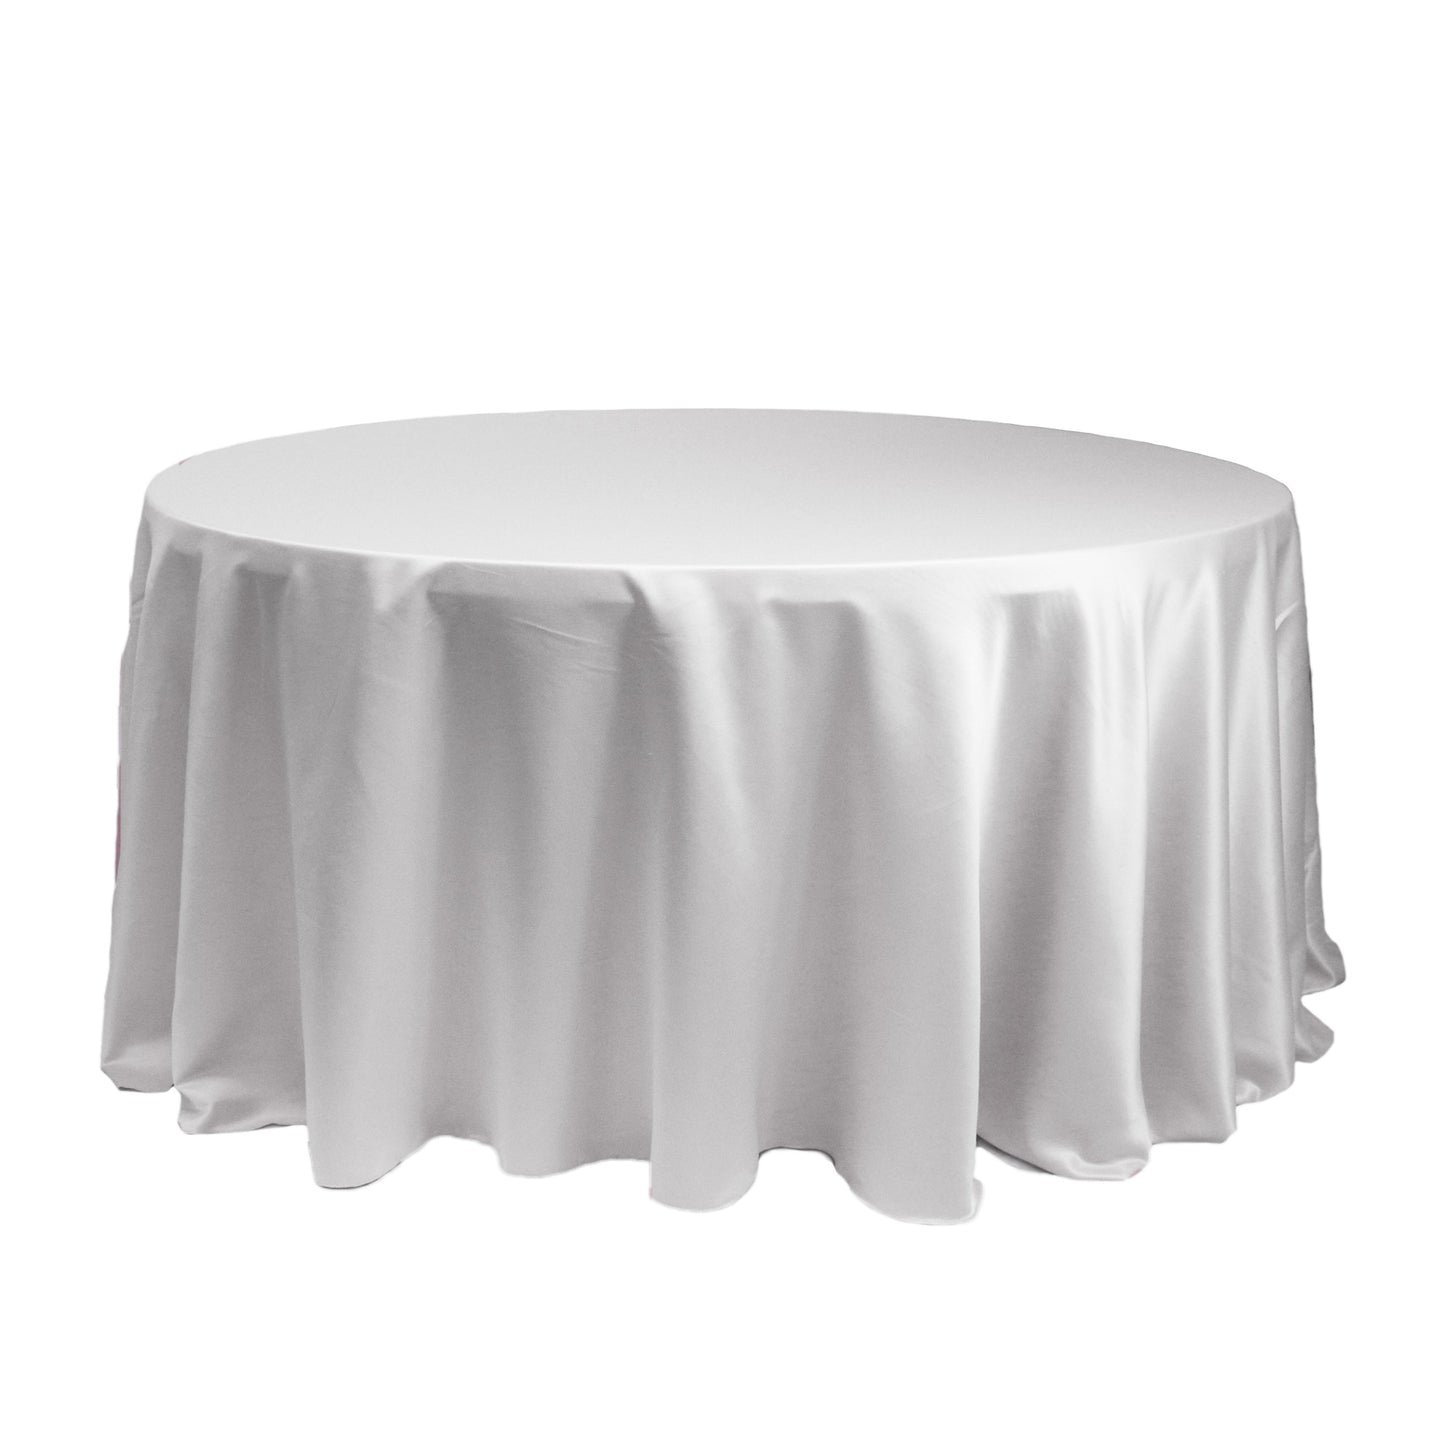 120" white satin lamour table cloth round